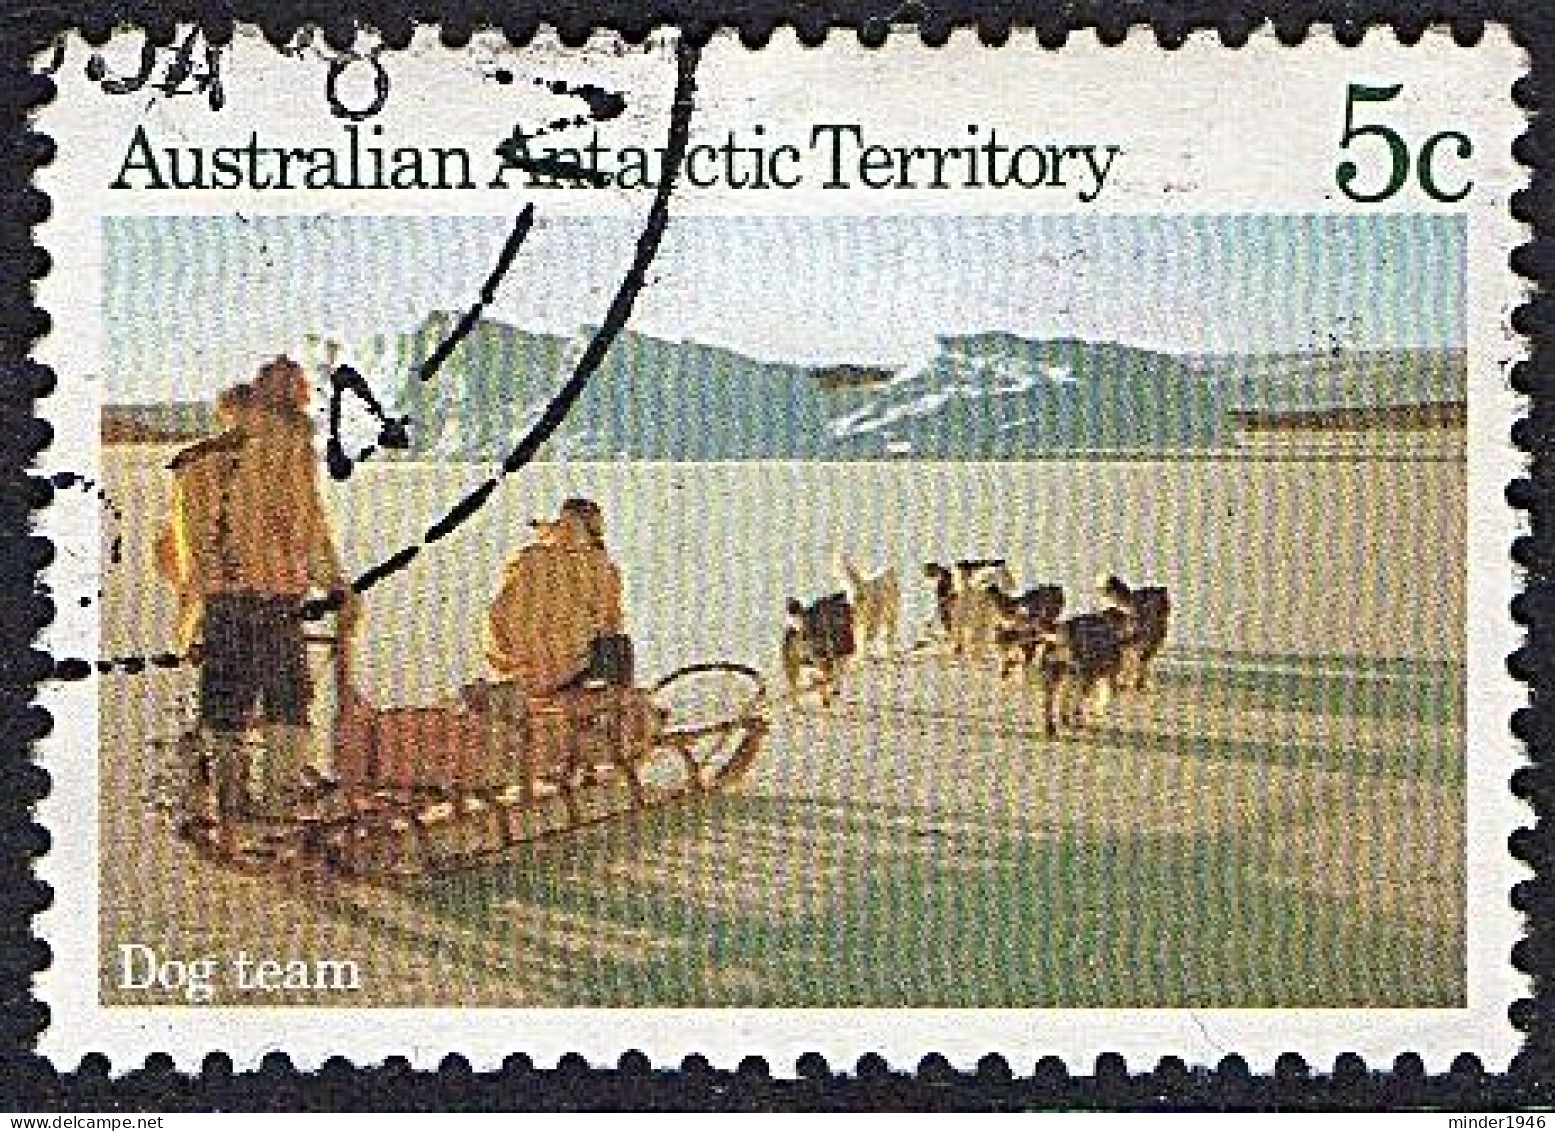 AUSTRALIAN ANTARCTIC TERRITORY (AAT) 1984 QEII 5c Multicoloured, Scenes-Dog Team SG64 FU - Gebruikt